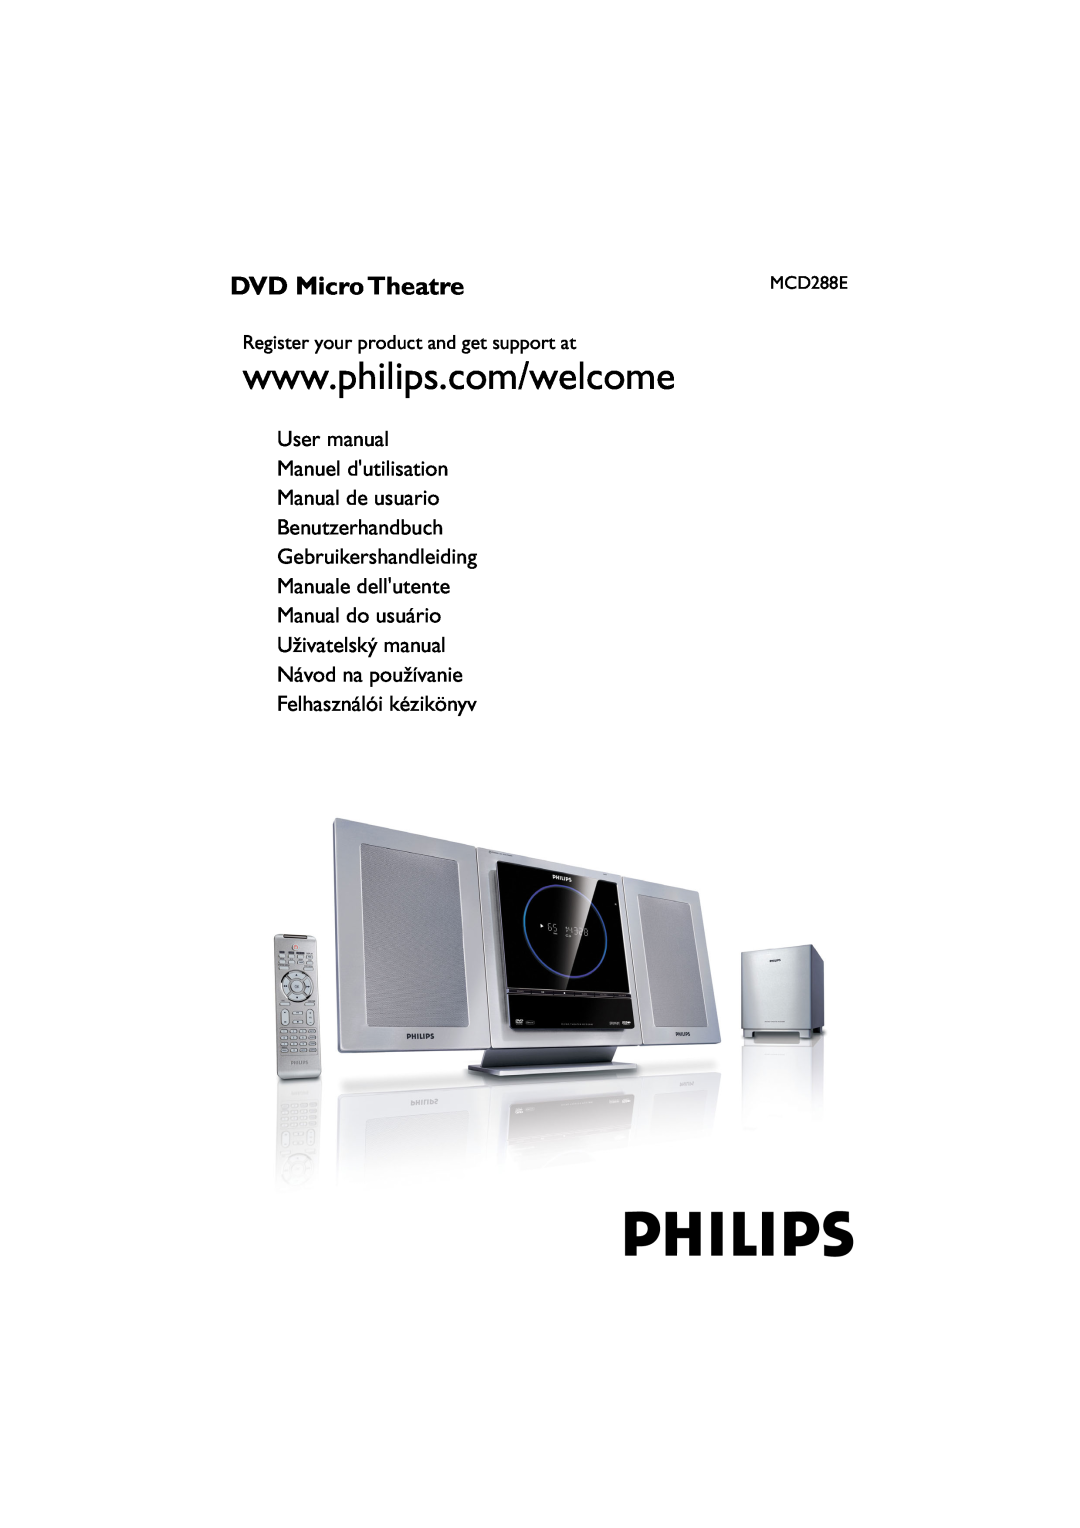 Philips MCD288E/12 user manual DVD Micro Theatre, User manual Manuel dutilisation Manual de usuario Benutzerhandbuch 